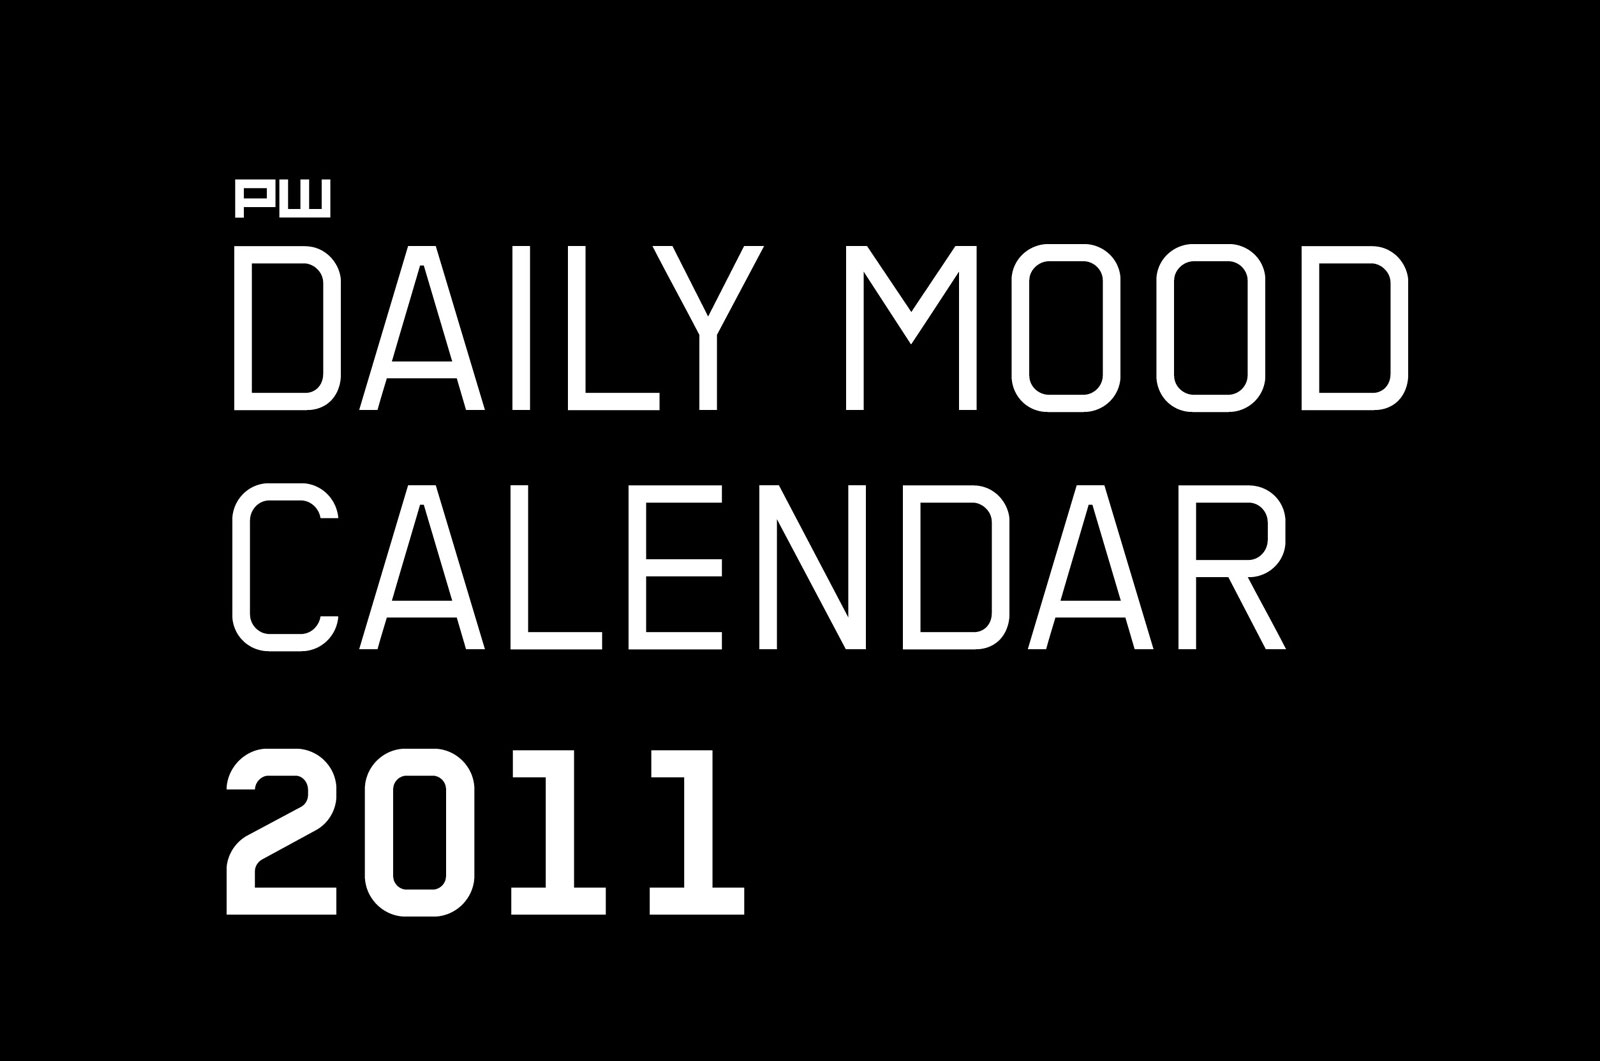 Alexander Glante - Works - Daily Mood Calendar 2011 - 03